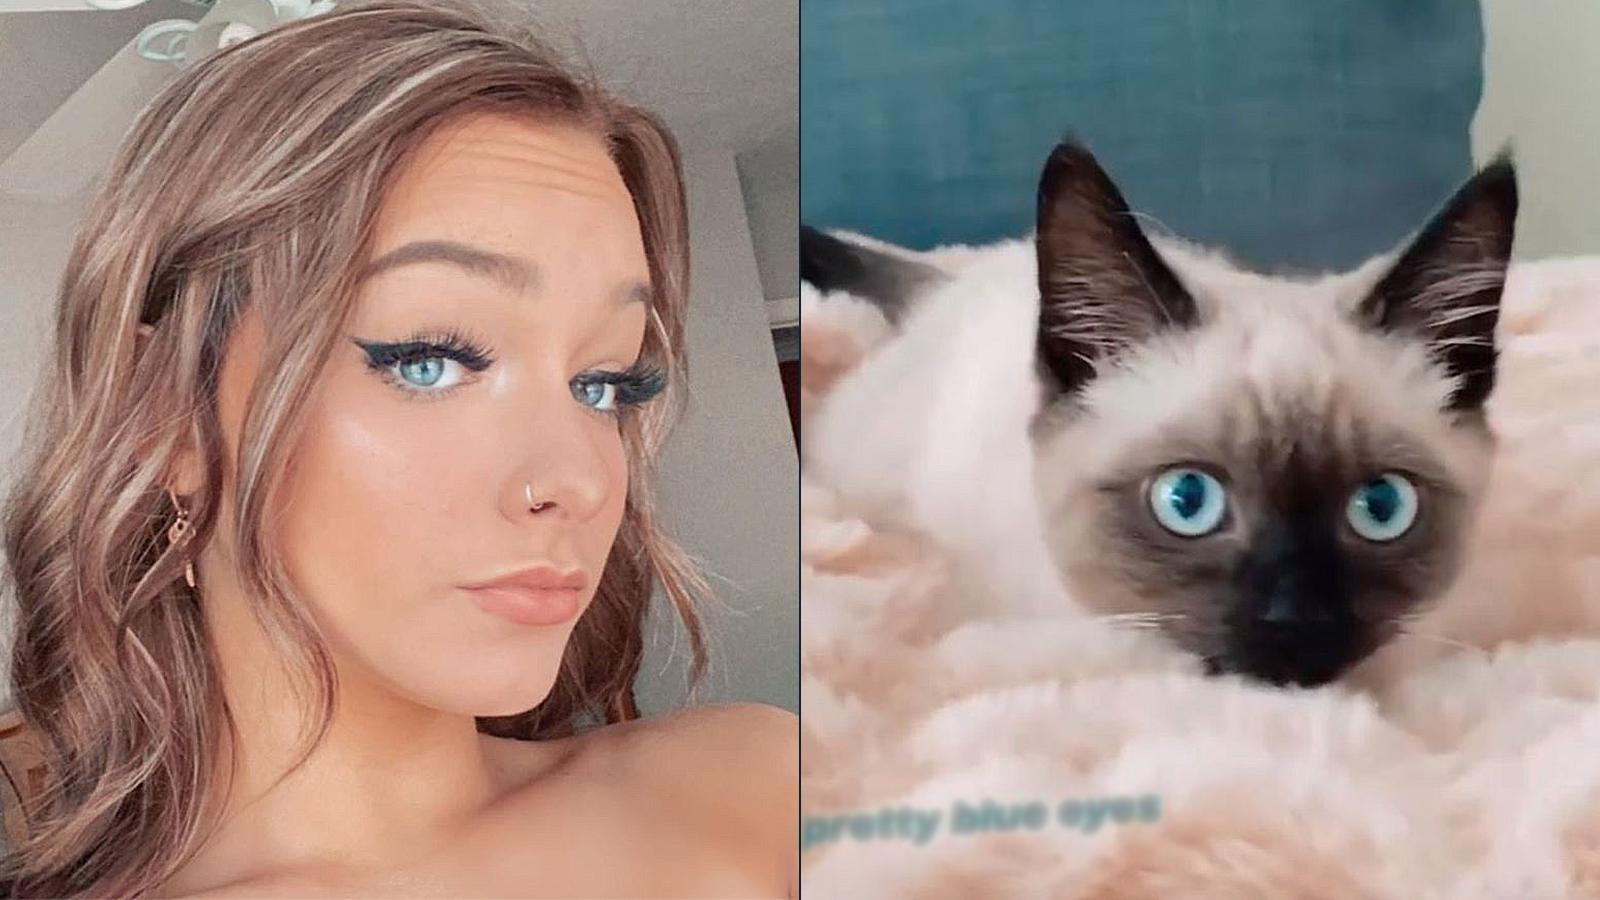 TikToker Zoe Laverne responds to claims of harming her pet cat